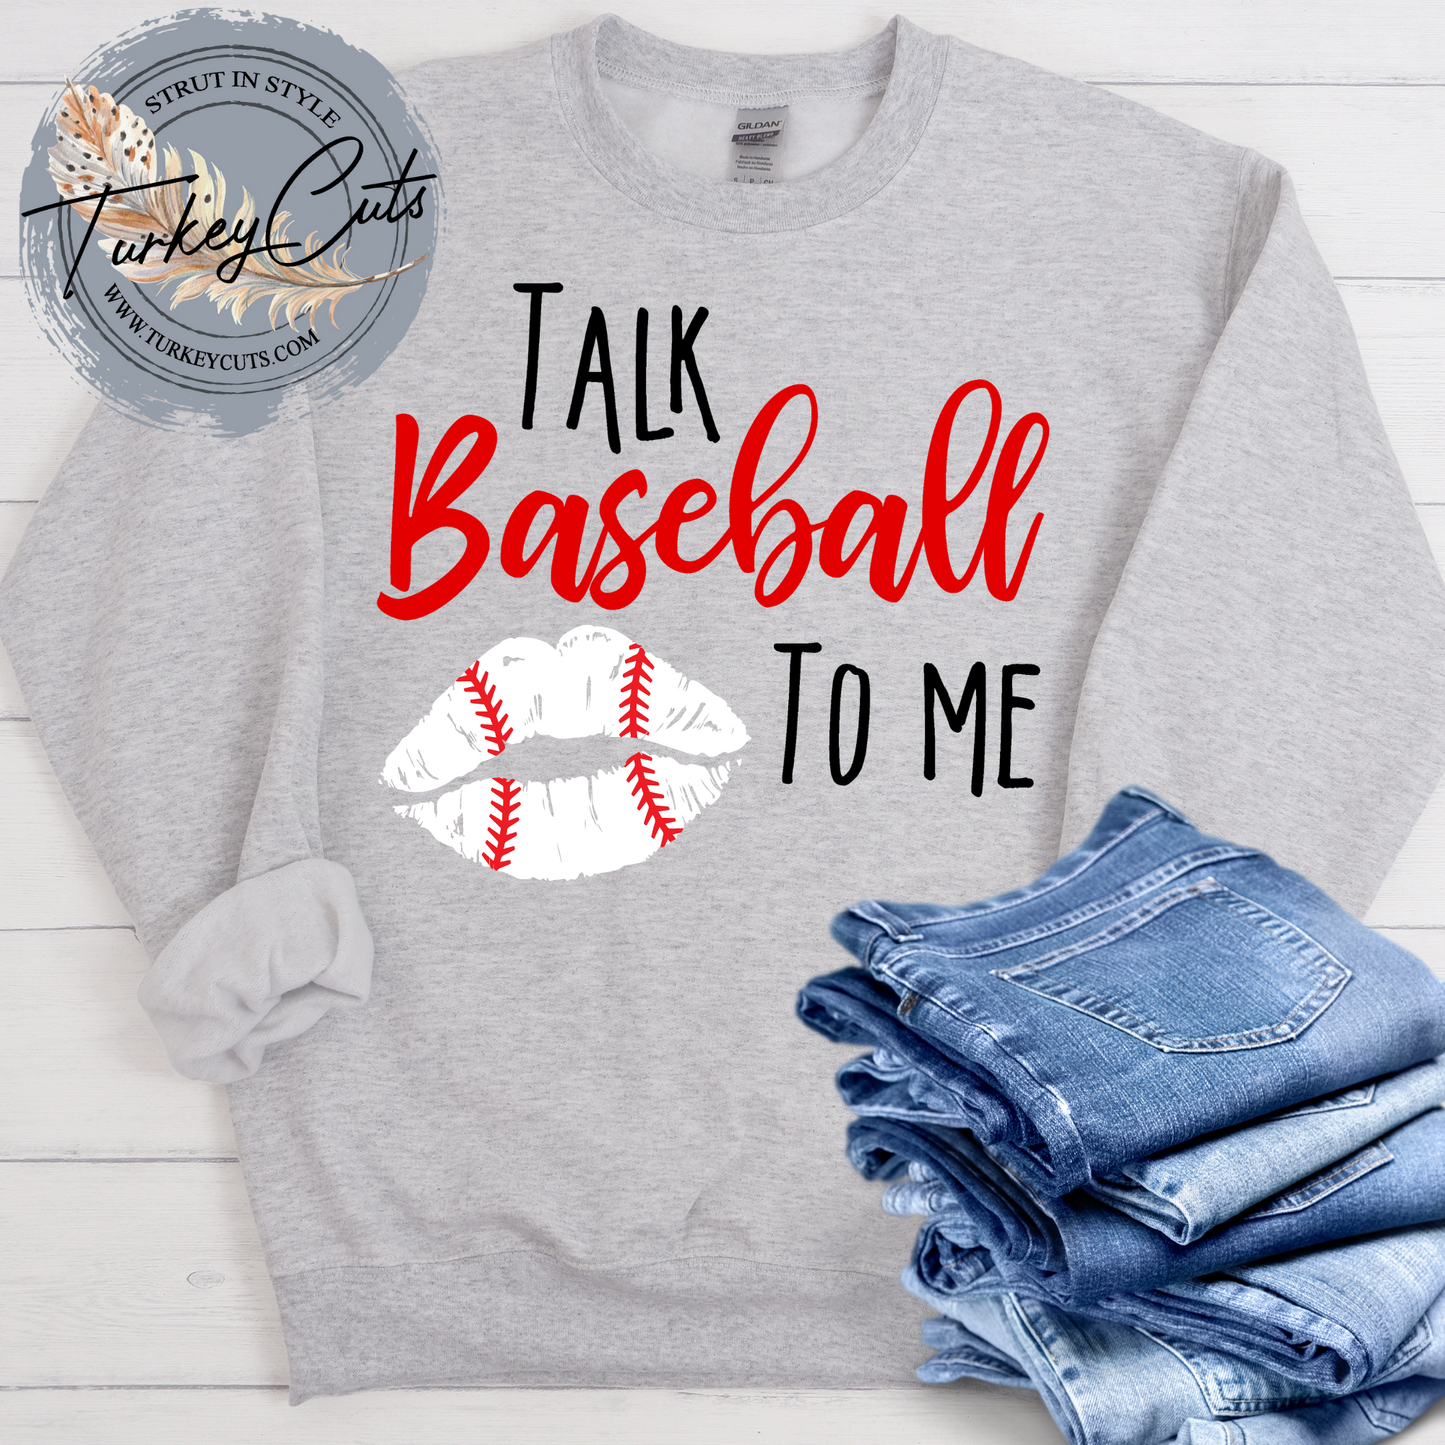 Talk Baseball To Me - Youth